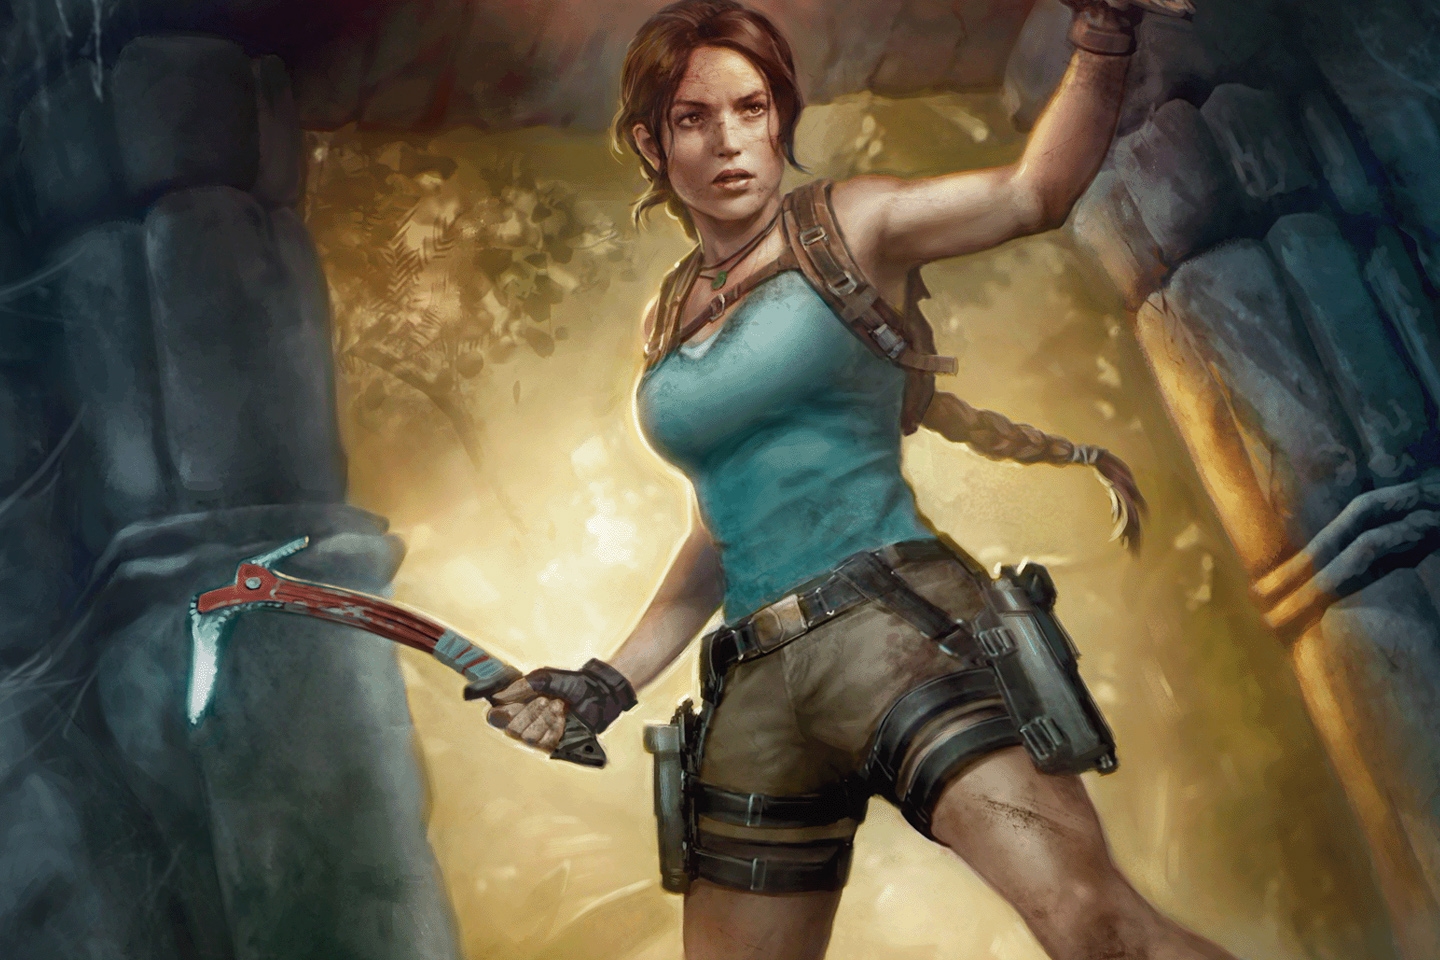 Magic: The Gathering Lara Croft illustration holding her Pickaxe